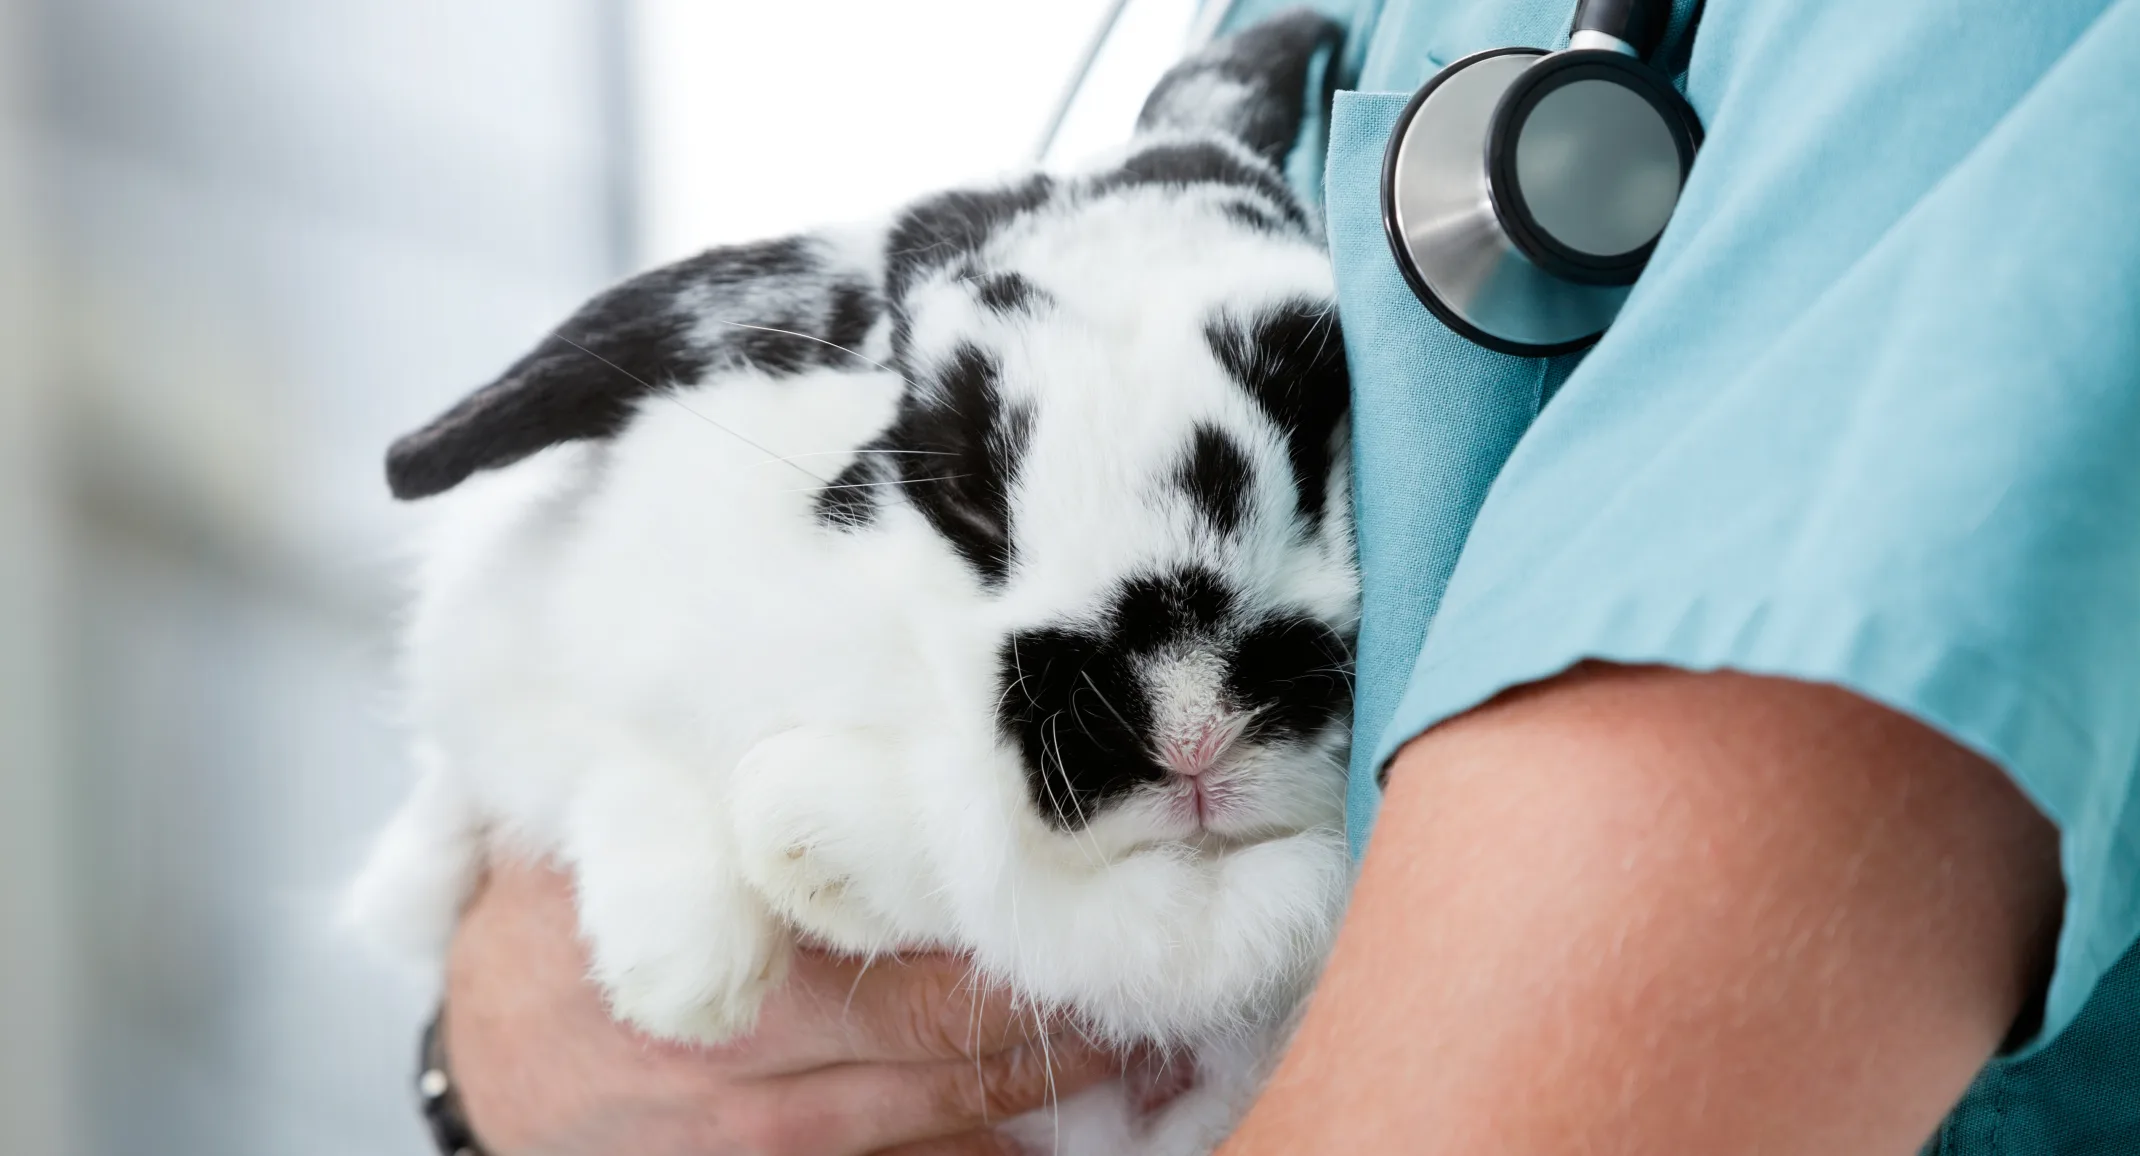 Veterinary staff member holding a rabbit